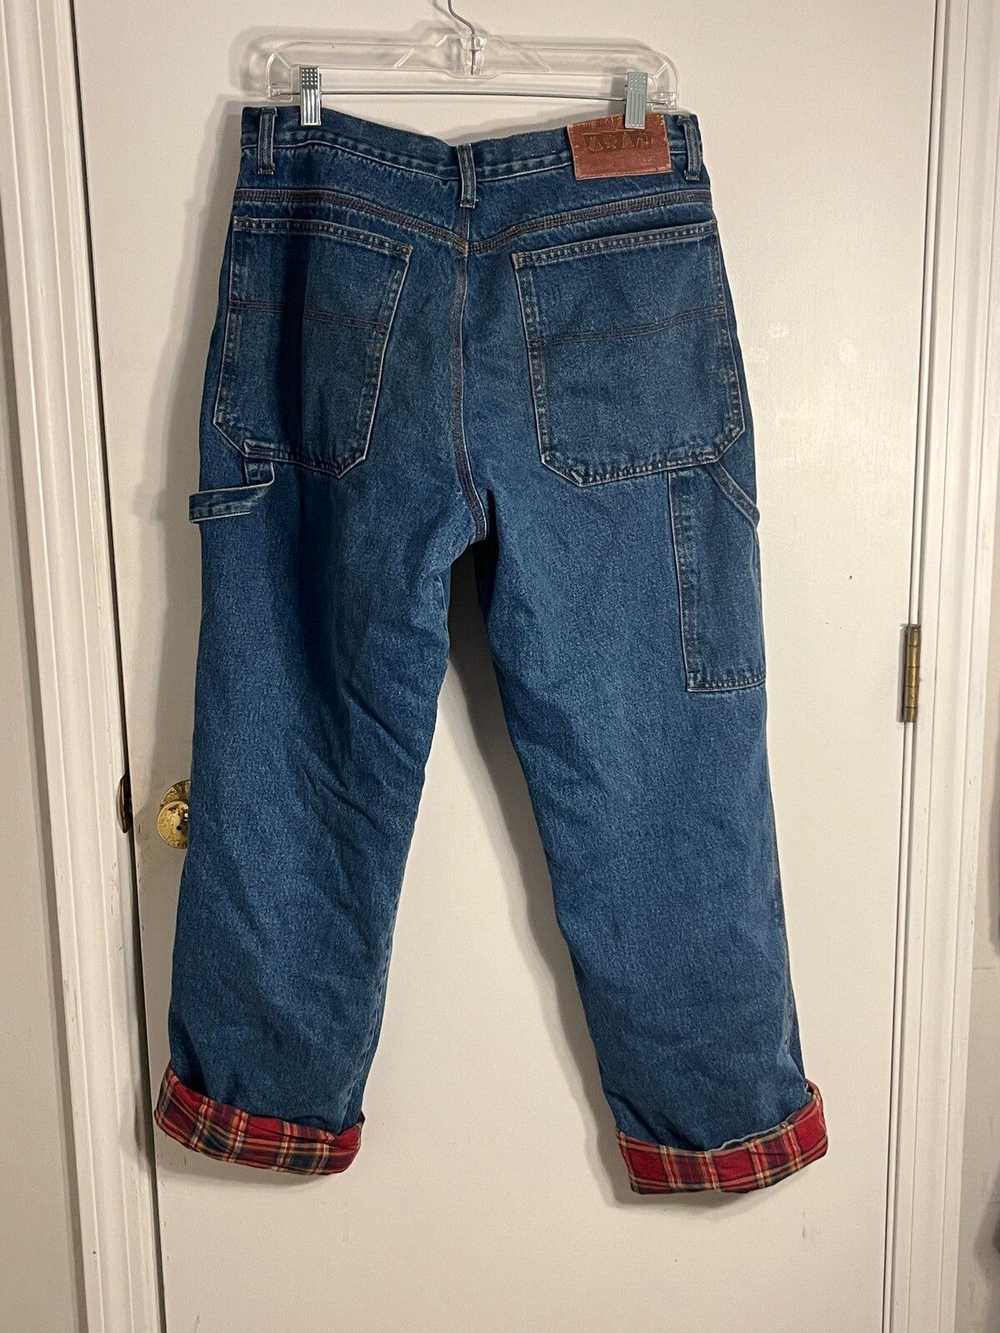 Vintage Moose Creek Red Flannel Jeans - image 2